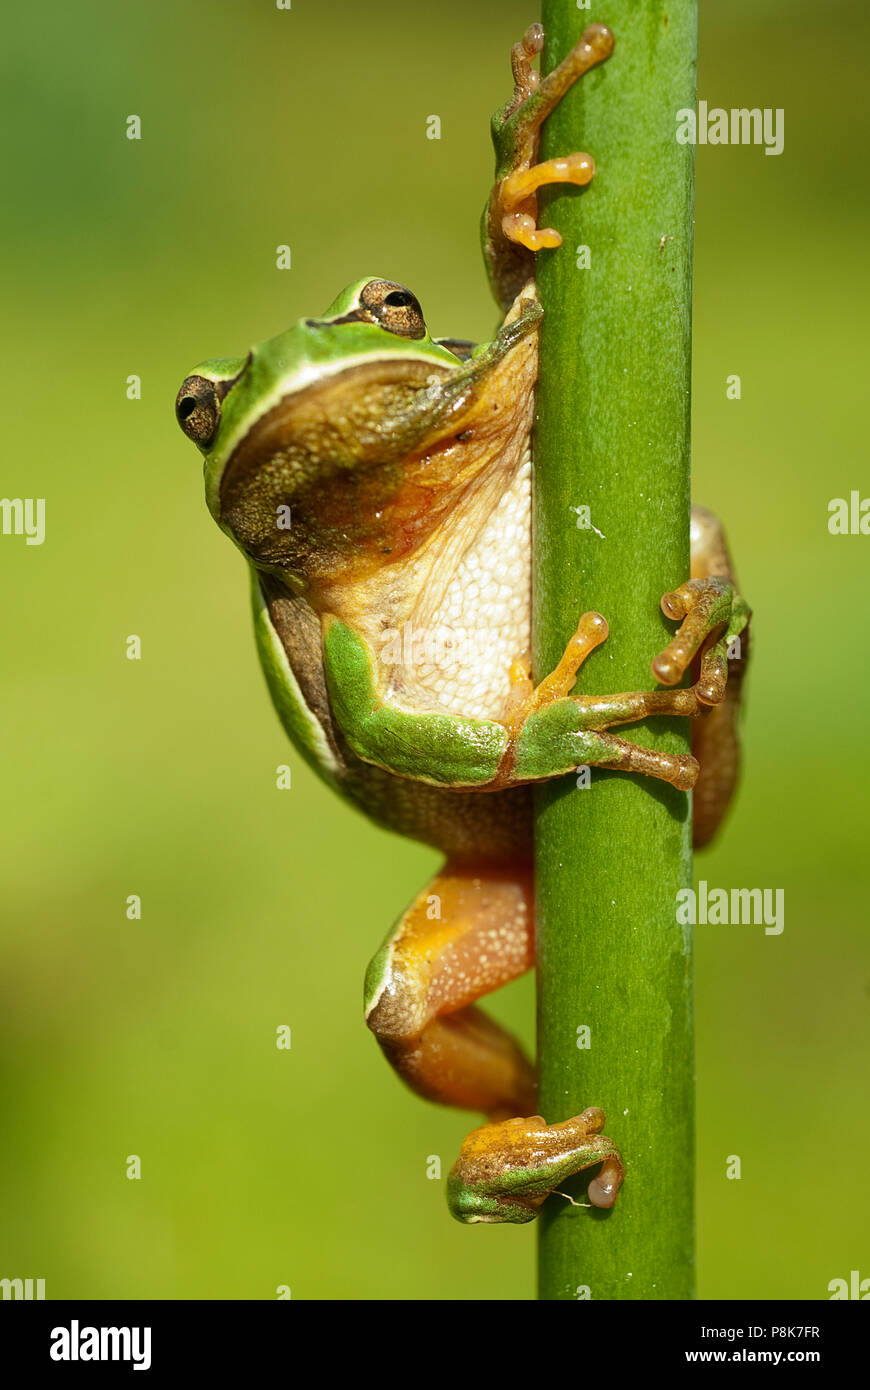 Pretty amphibian green European tree frog, Hyla arborea, sitting on the grass, Spain Stock Photo